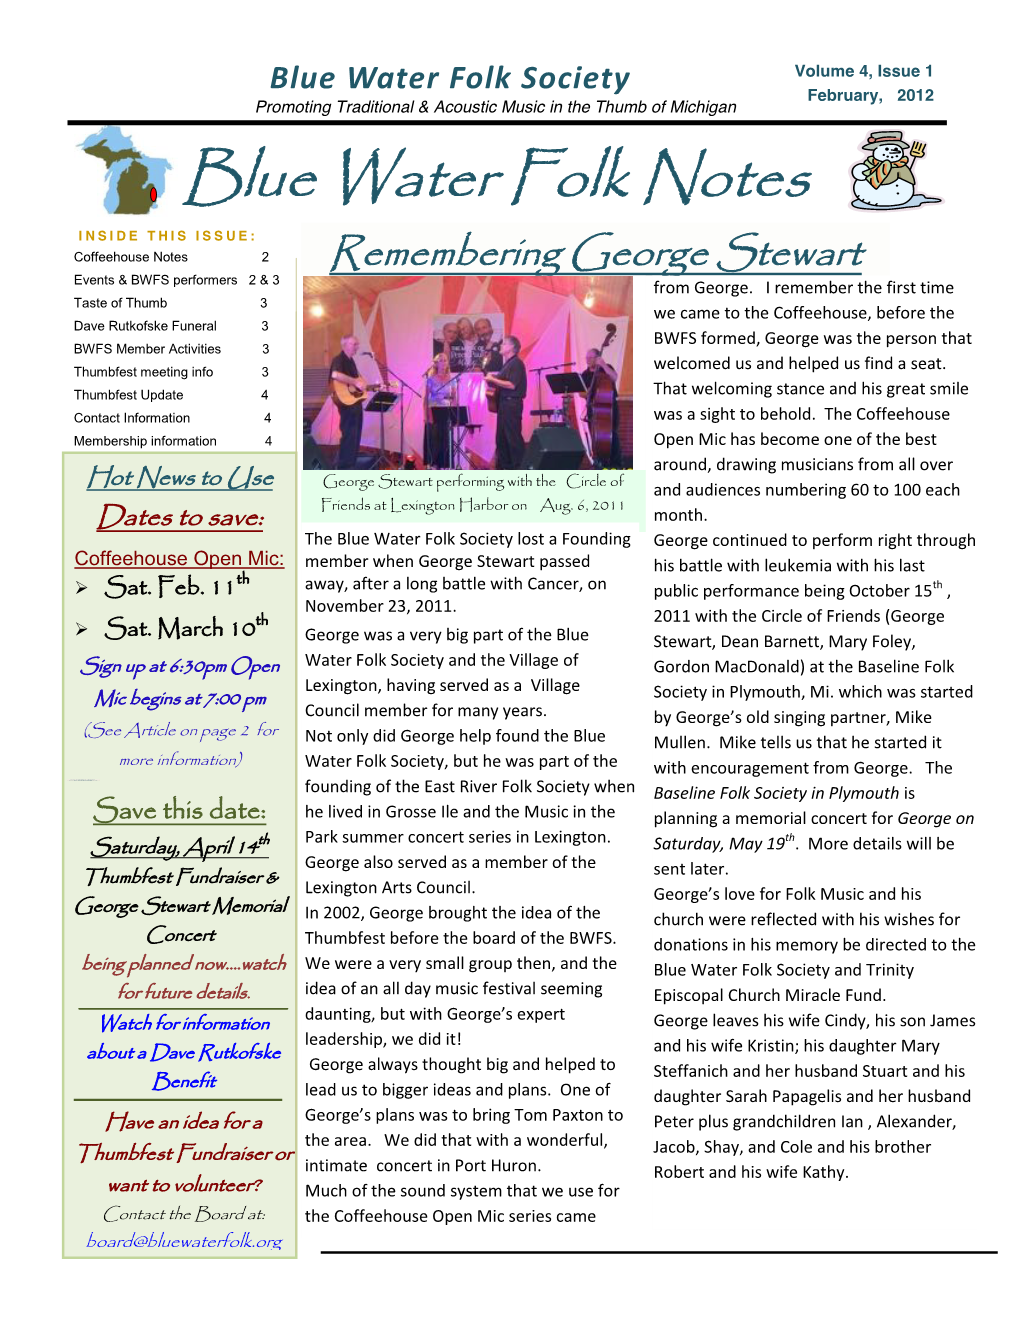 Blue Water Folk Notes